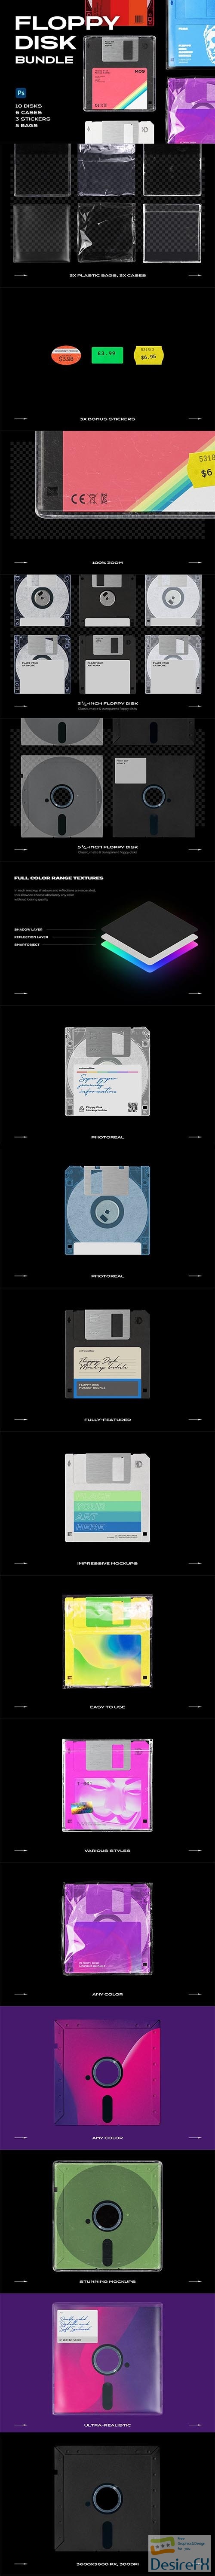 CreativeMarket - Floppy Disk Mockup Template Bundle 6178295